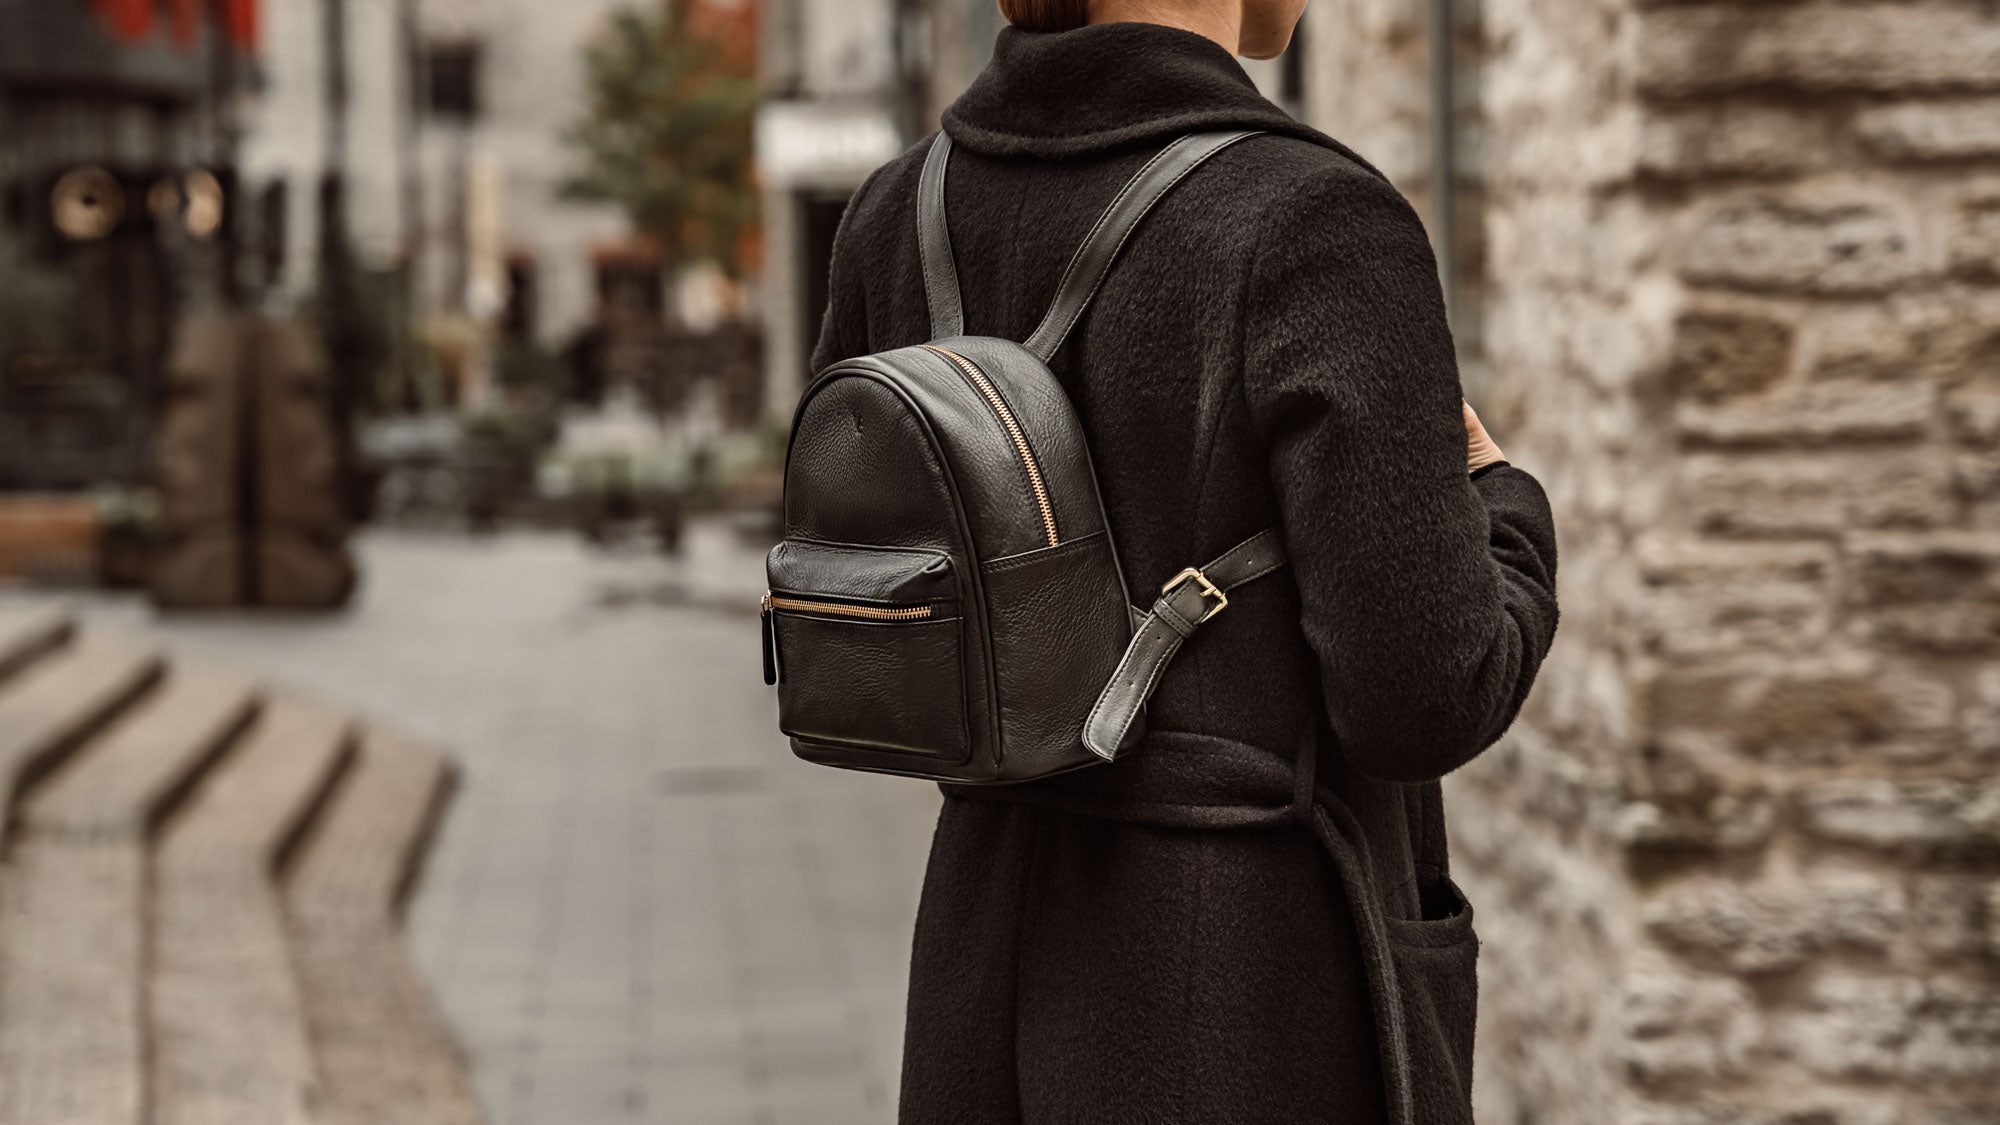 Women's Mini Leather Backpack